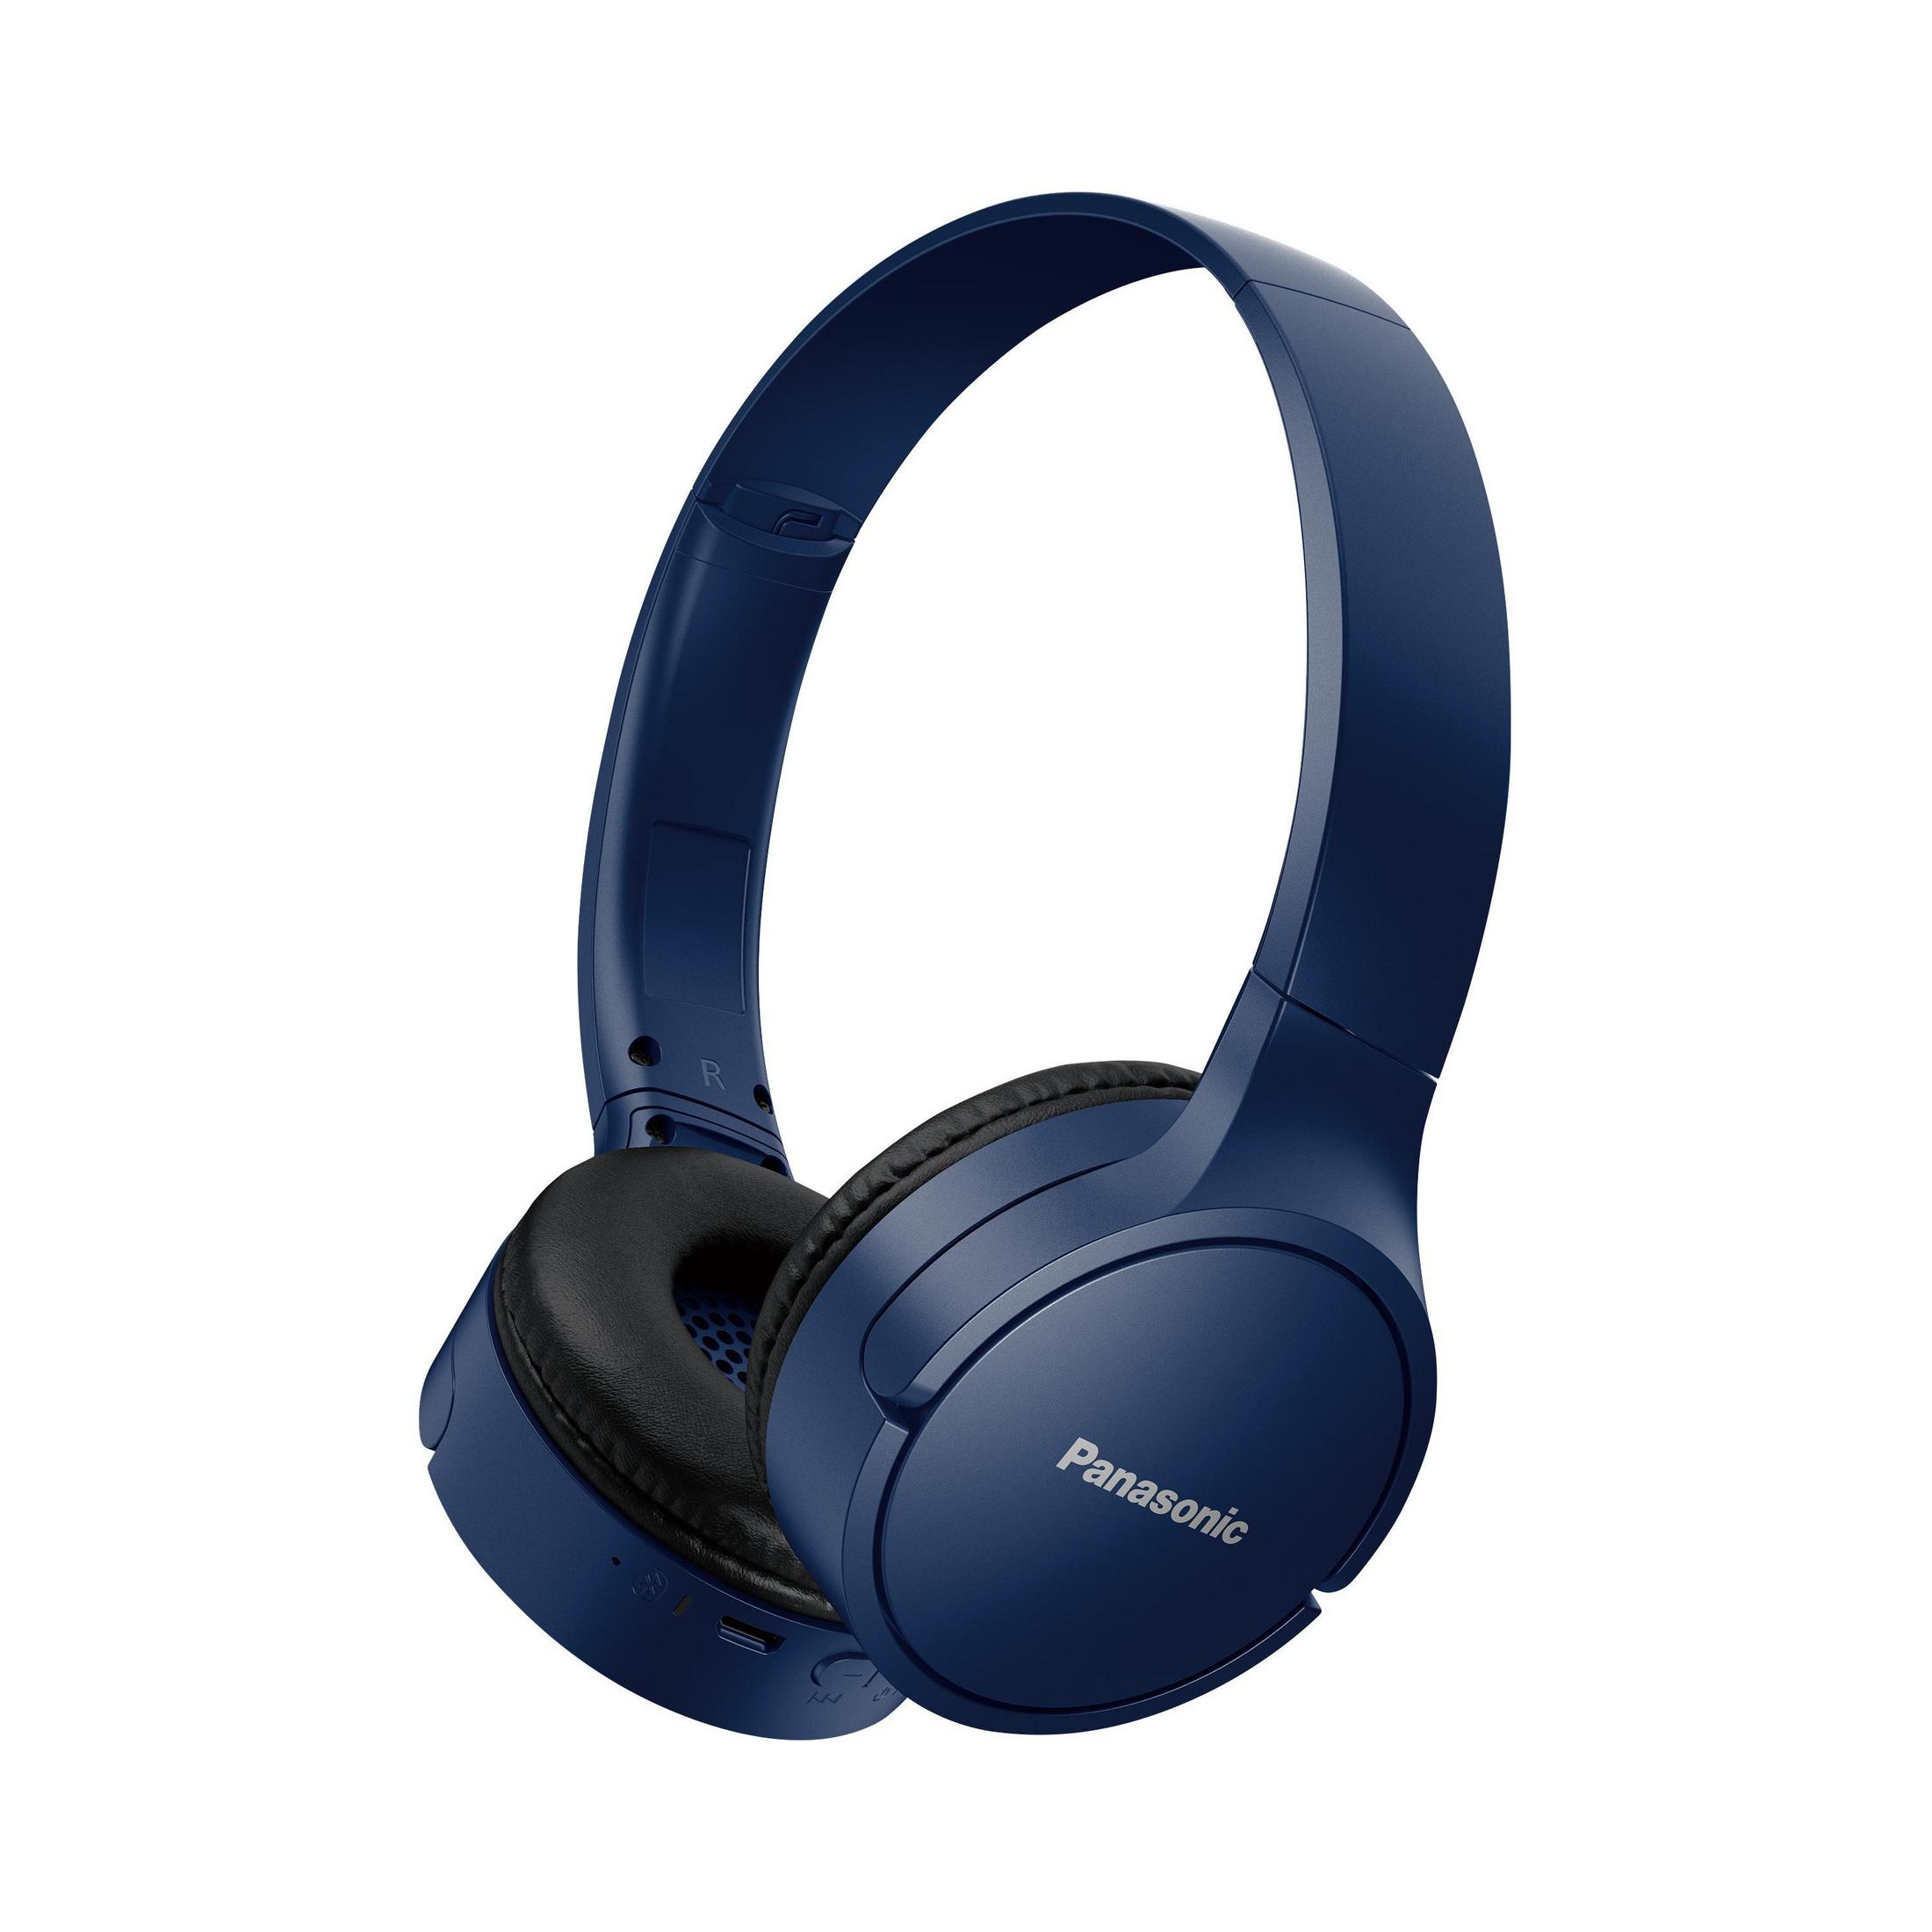 Blau Bluetooth PANASONIC KOPFHÖRER Kopfhörer BT RB-HF420BE-A ON-EAR BLAU, On-ear